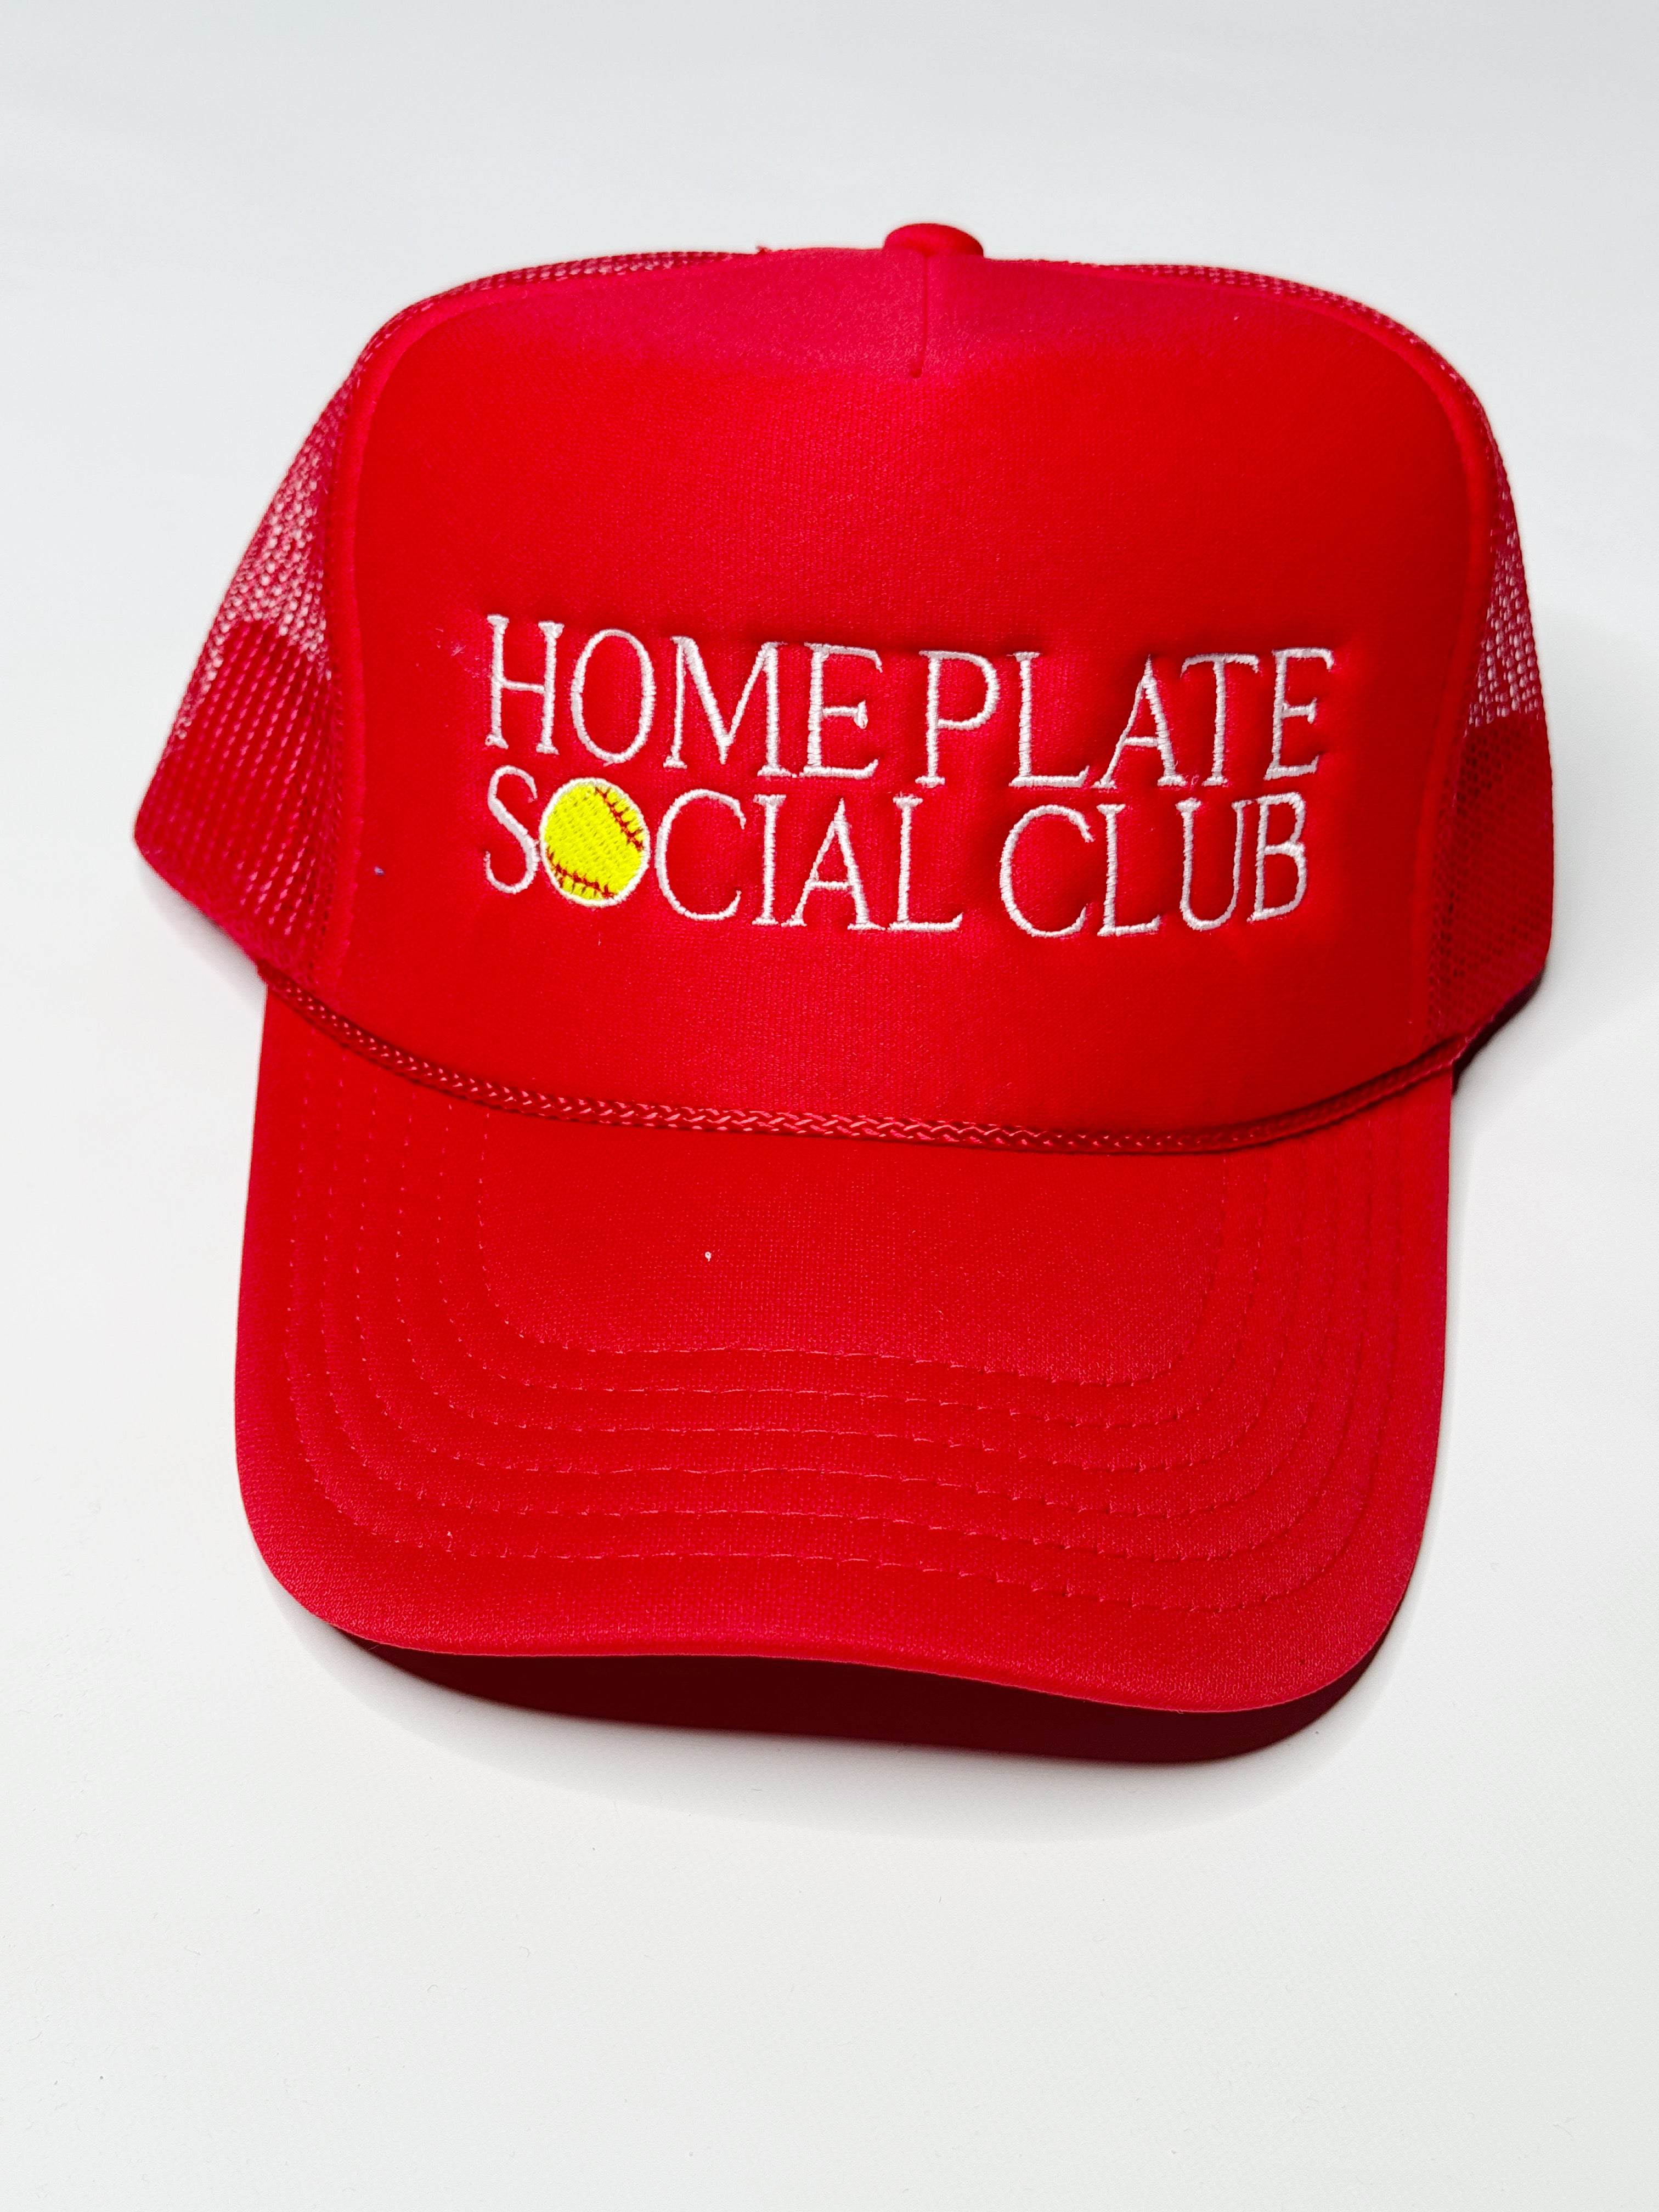 Home Plate Social Club Softball Red Trucker Hat